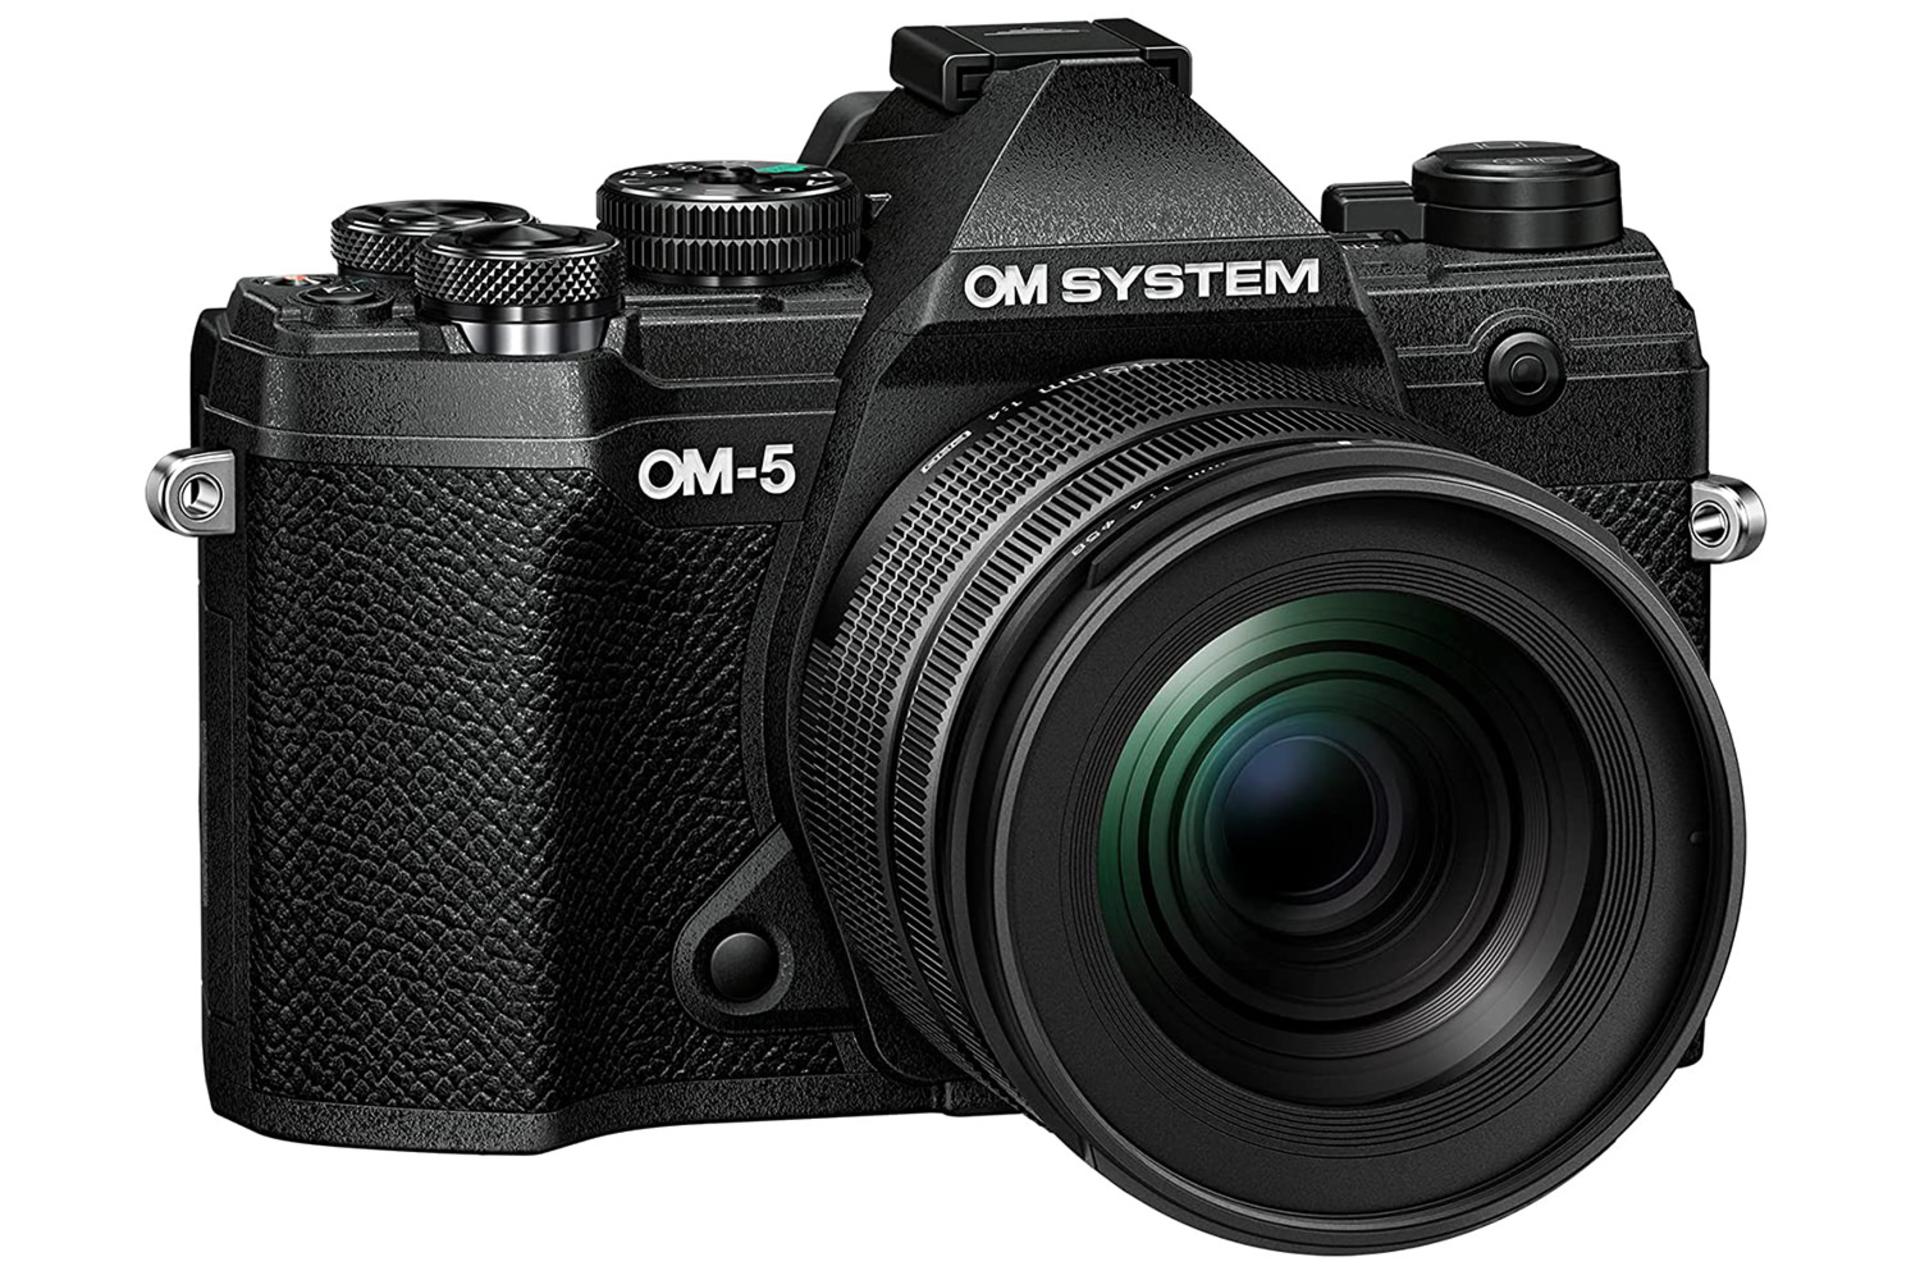 دوربین او ام سیستم OM System OM-5 به همراه لنز